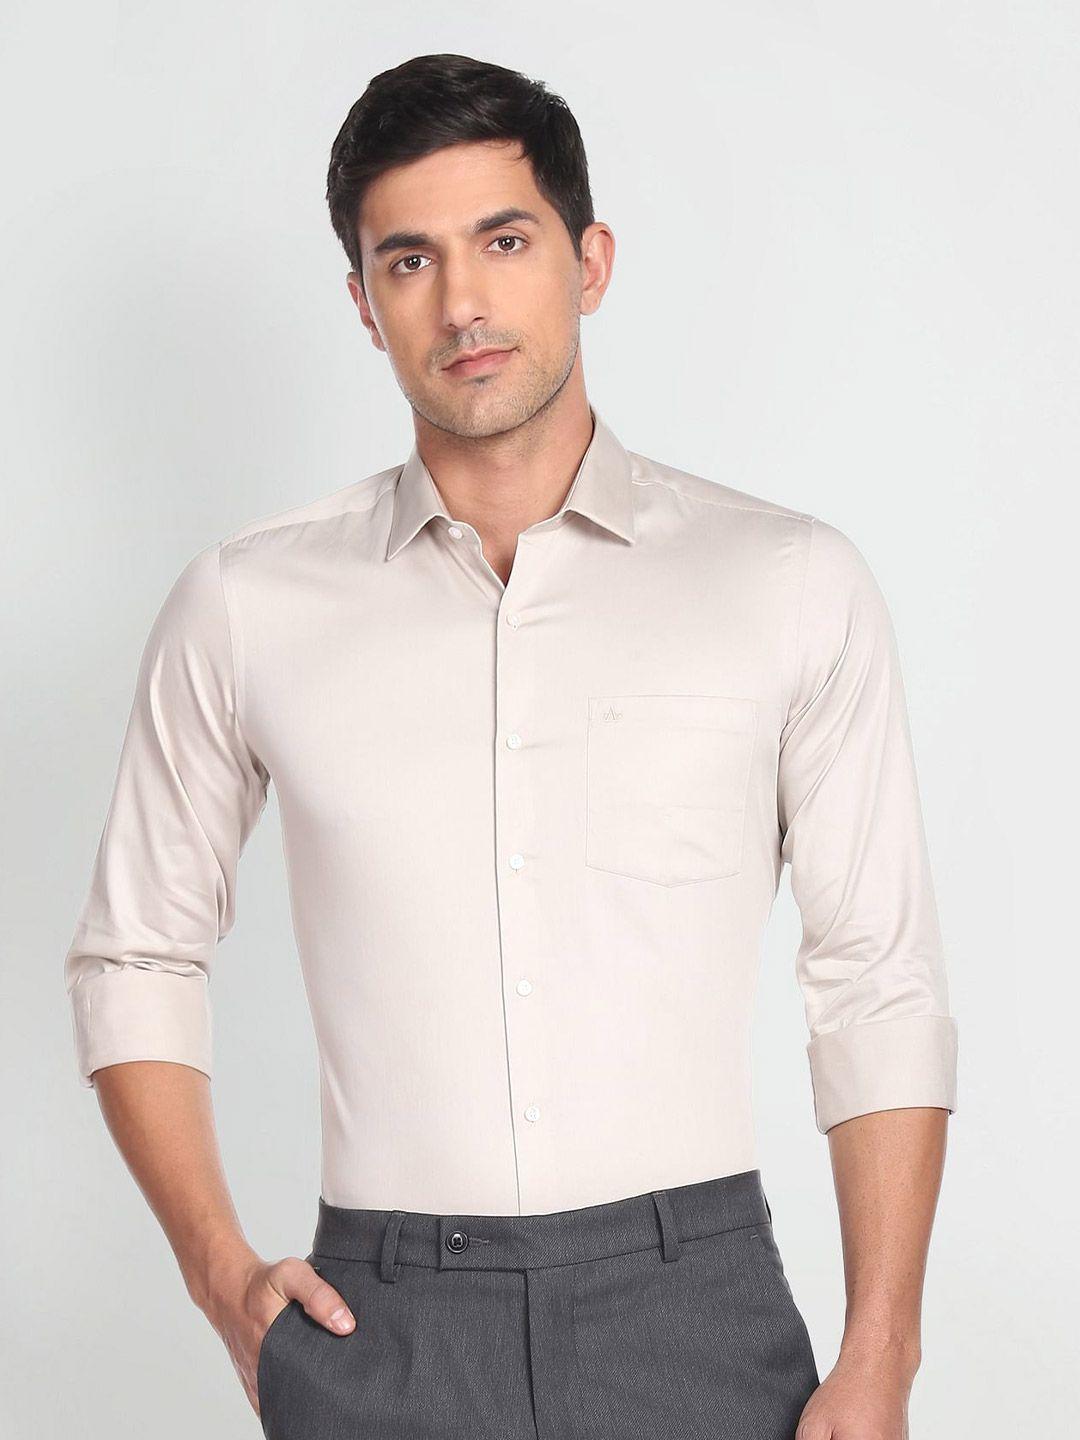 arrow slim fit spread collar pure cotton casual shirt